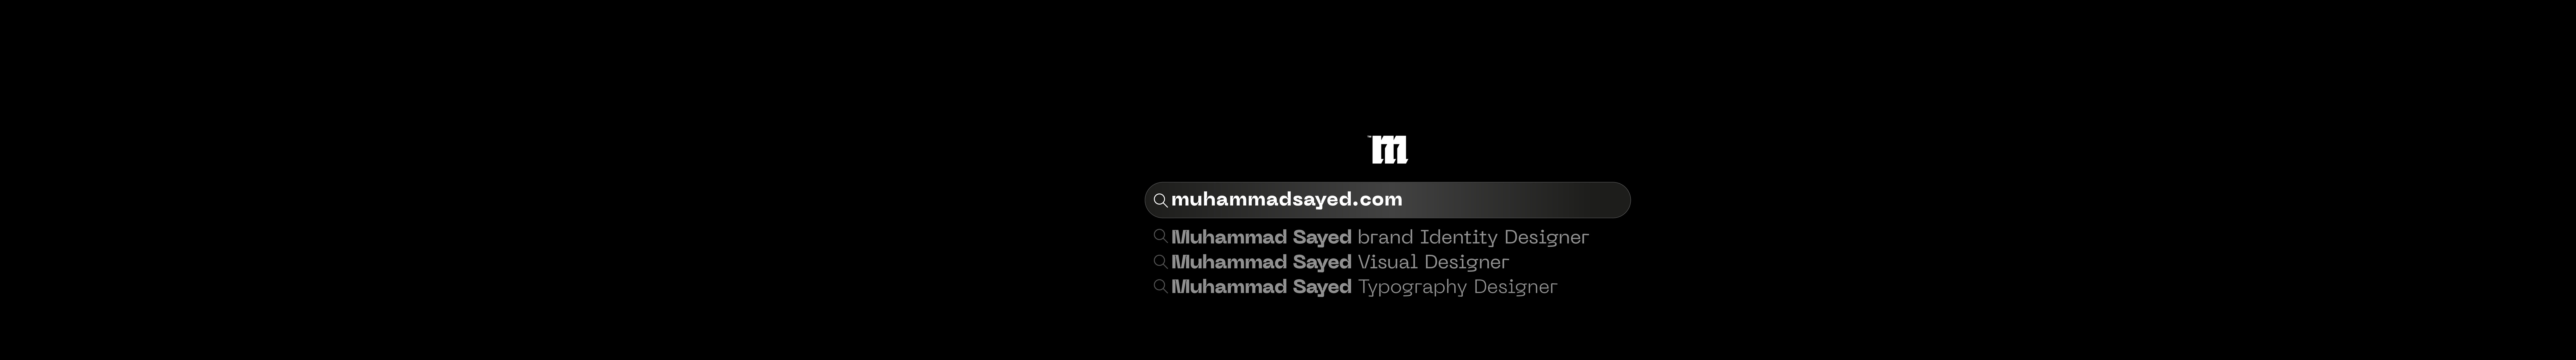 Muhammad Sayed's profile banner